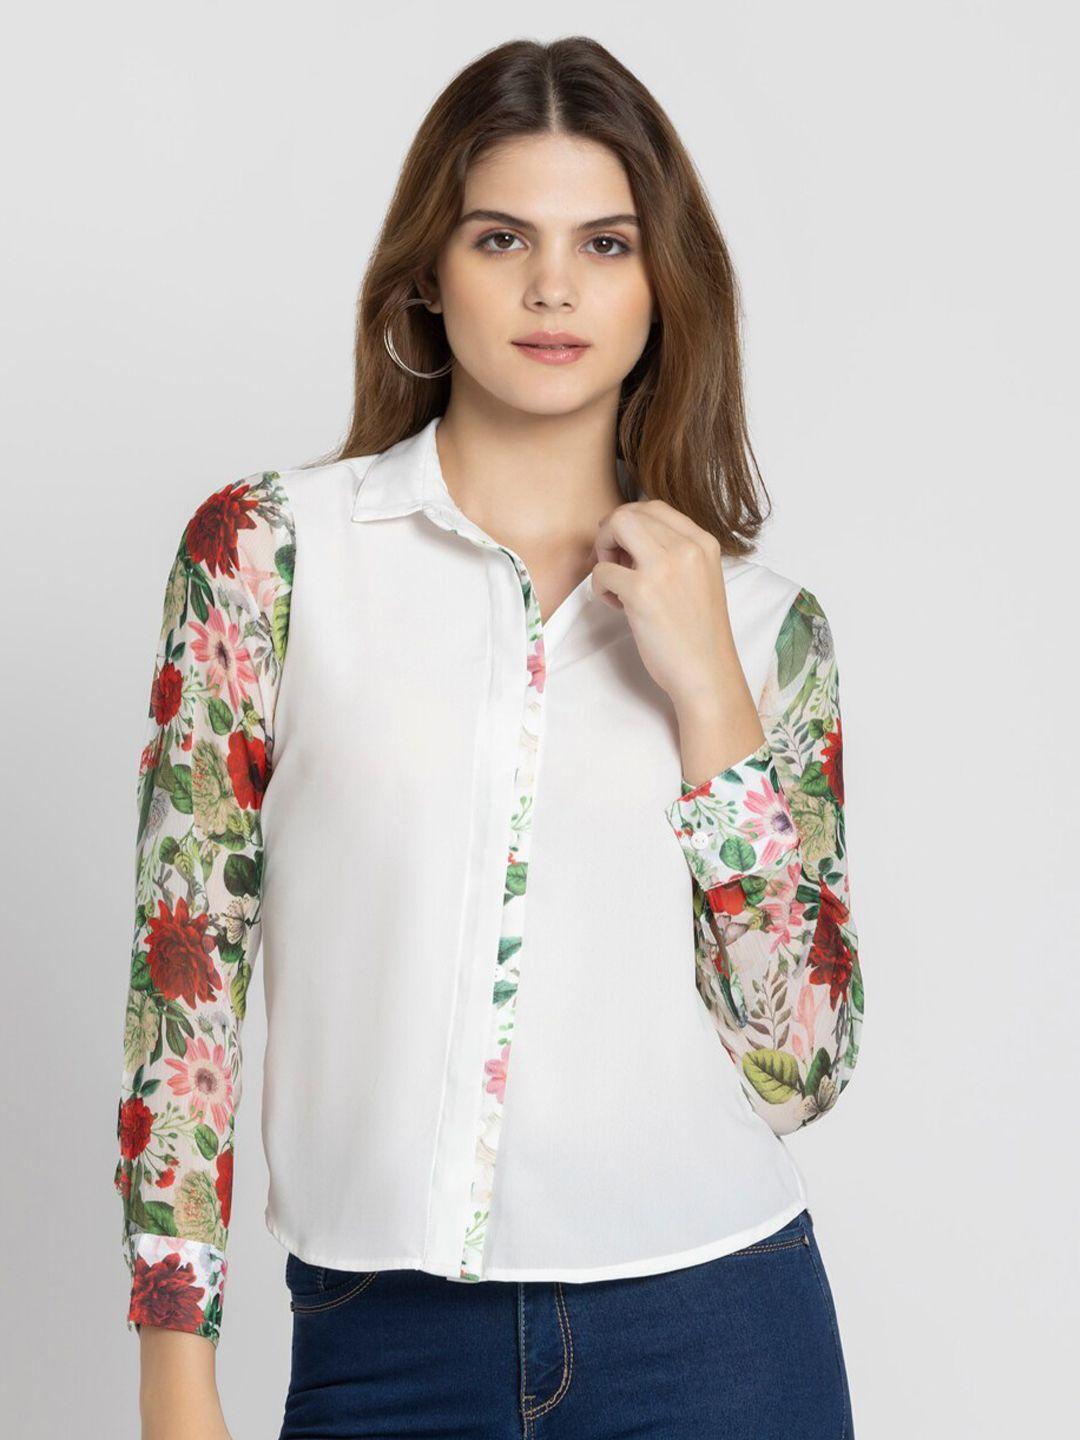 shaye-smart-slim-fit-floral-printed-casual-shirt